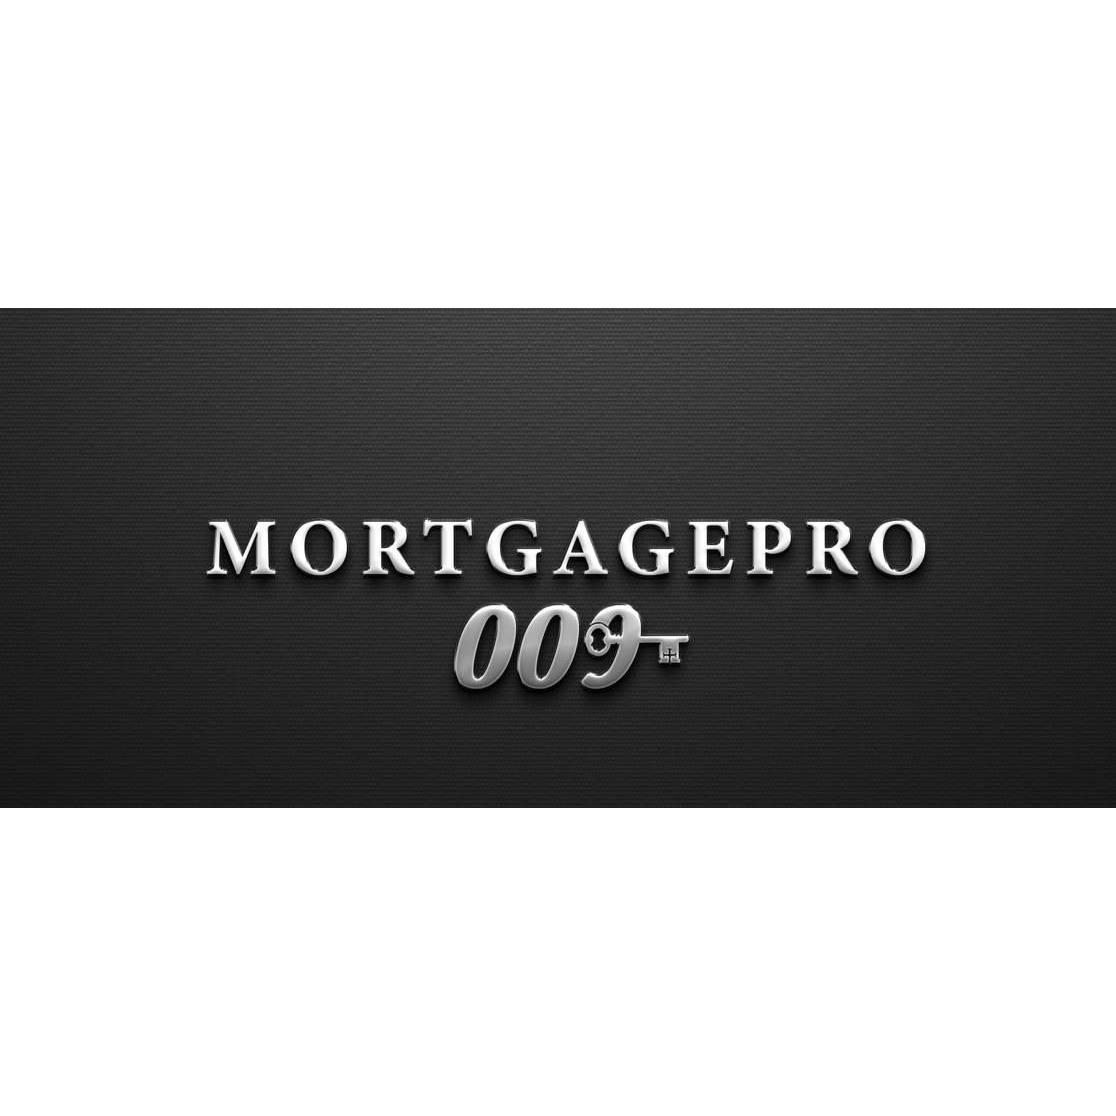 Jesus Gurrola | Professional Mortgage Associates